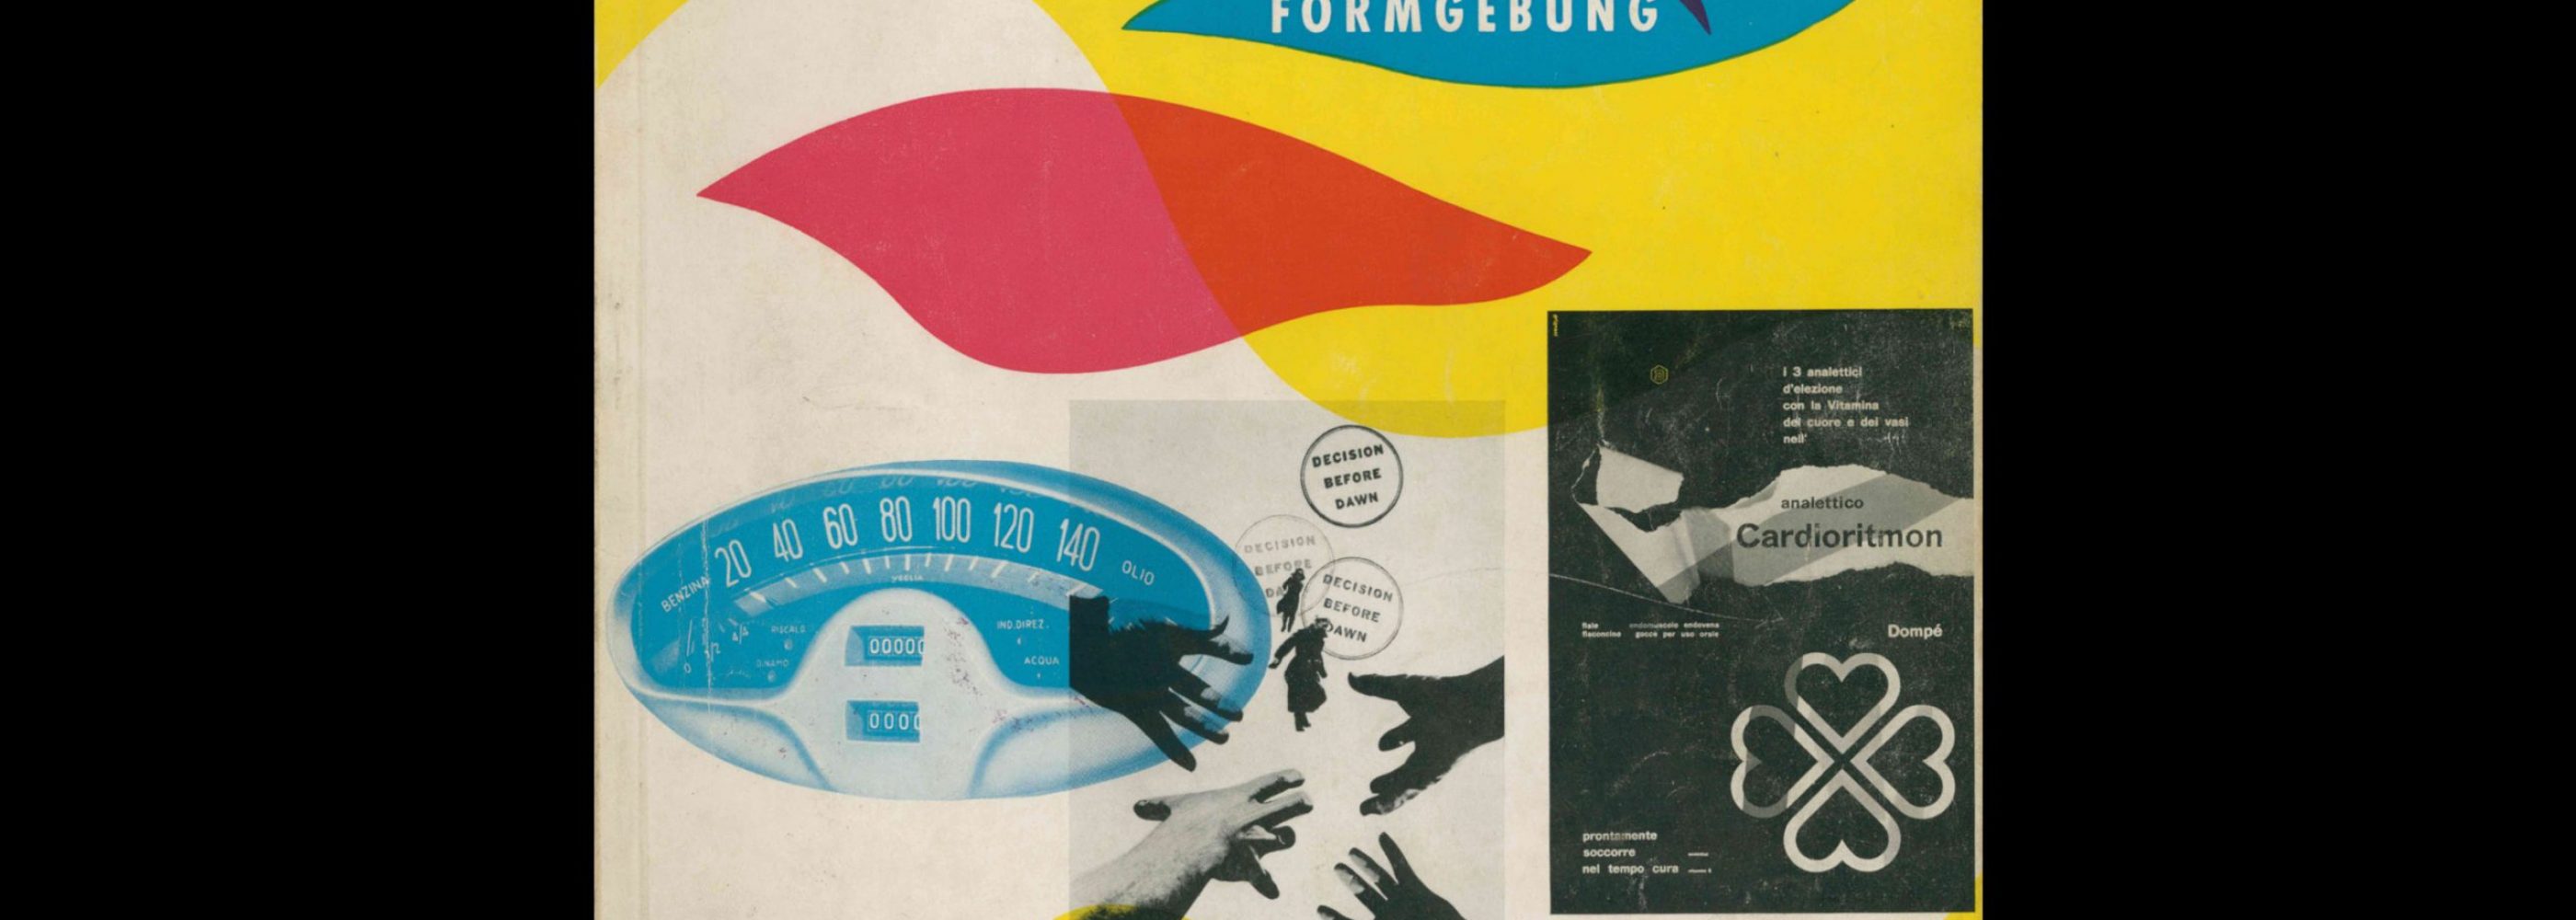 Graphik – Werbung + Formgebung, 1, 1956